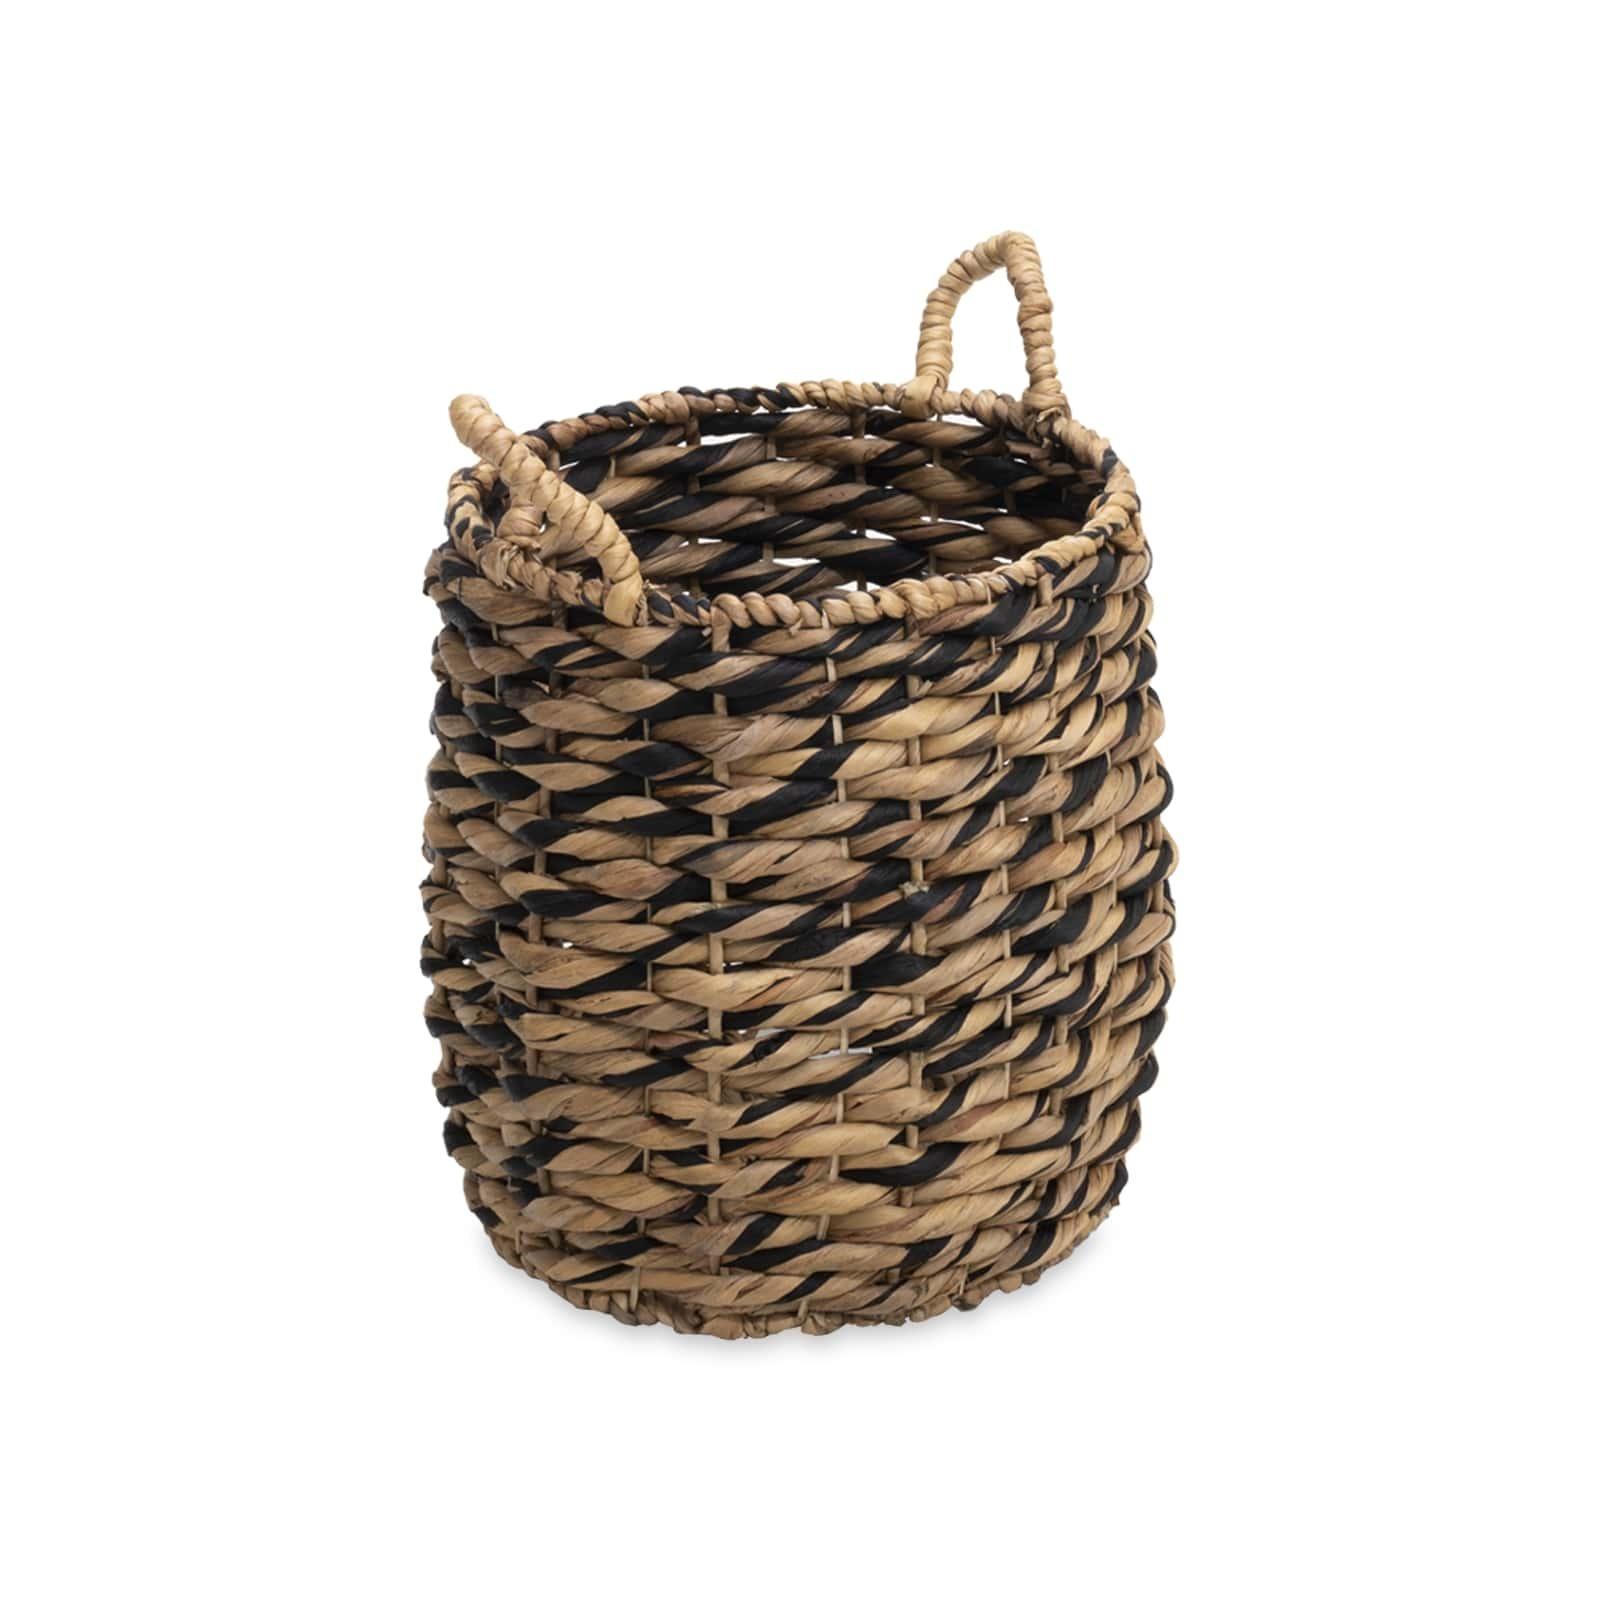 James Water Hyacinth Basket, Natural, M